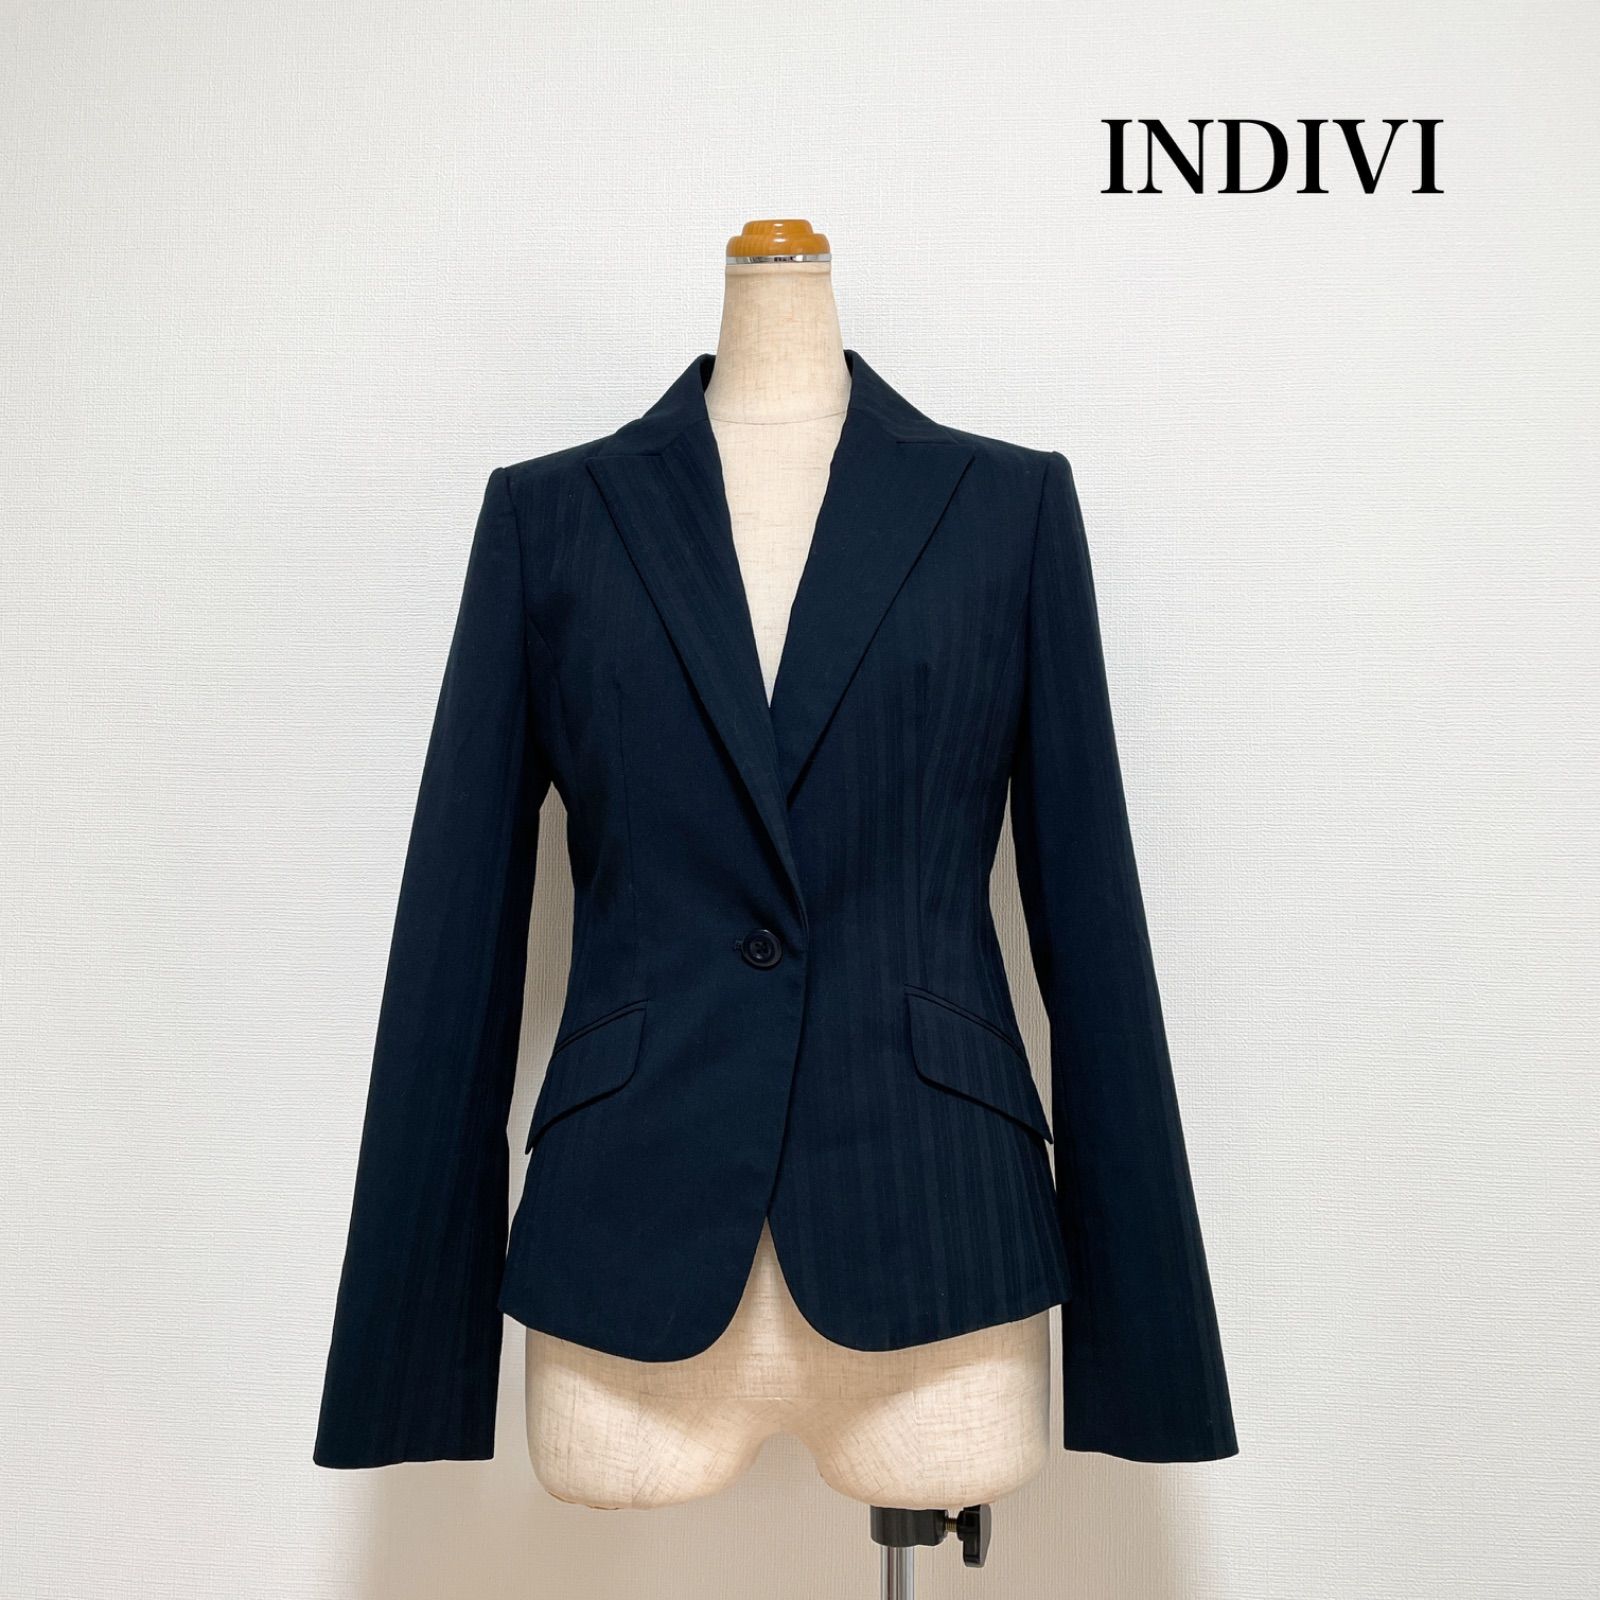 INDIVI インディヴィ ジャケット 38 Mサイズ相当 ネイビー ストライプ 日本製 お仕事 セレモニー 式典